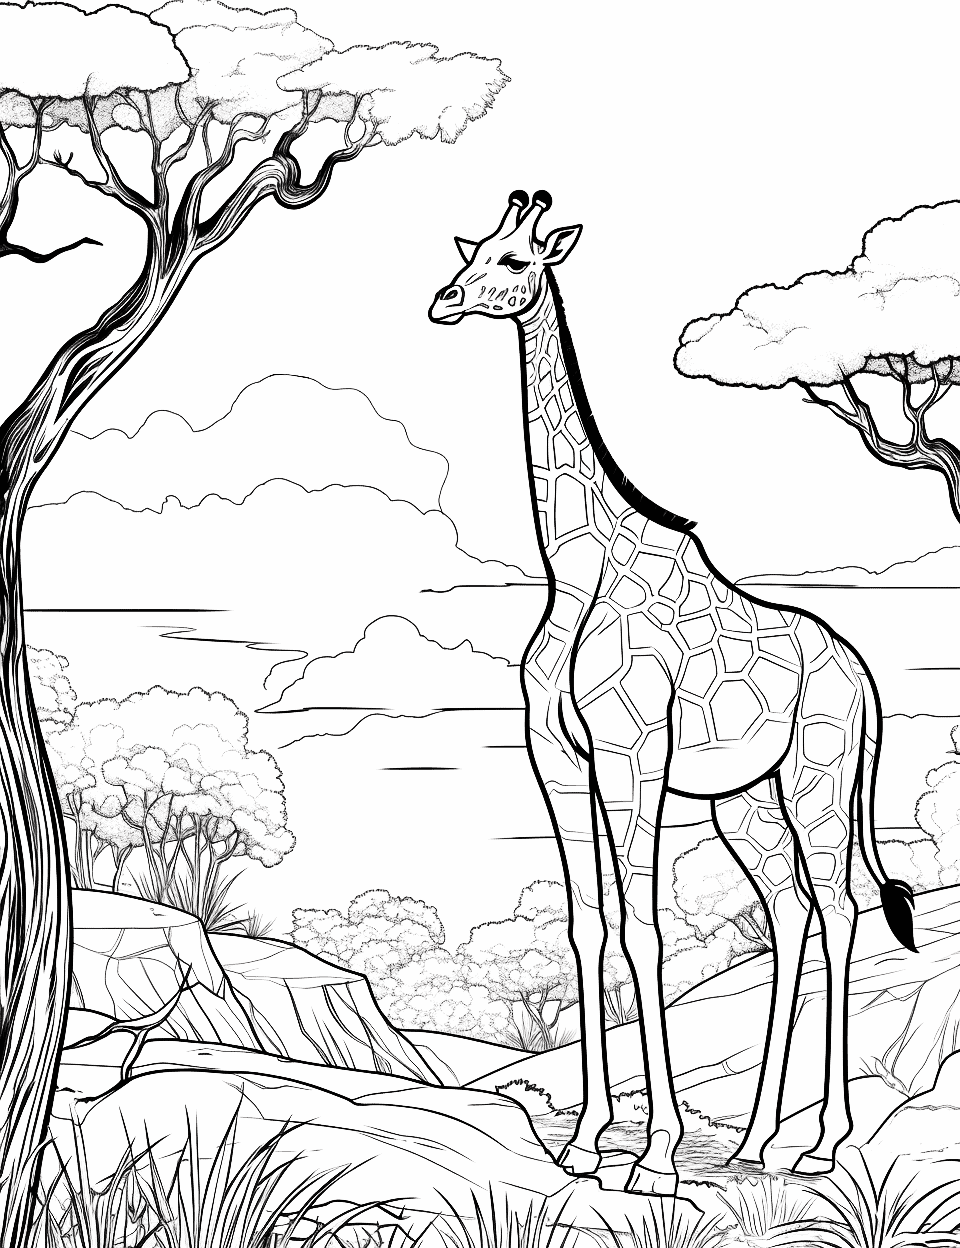 Giraffe's Horizon  Adult Coloring Page - A giraffe standing in between the vast savannah.